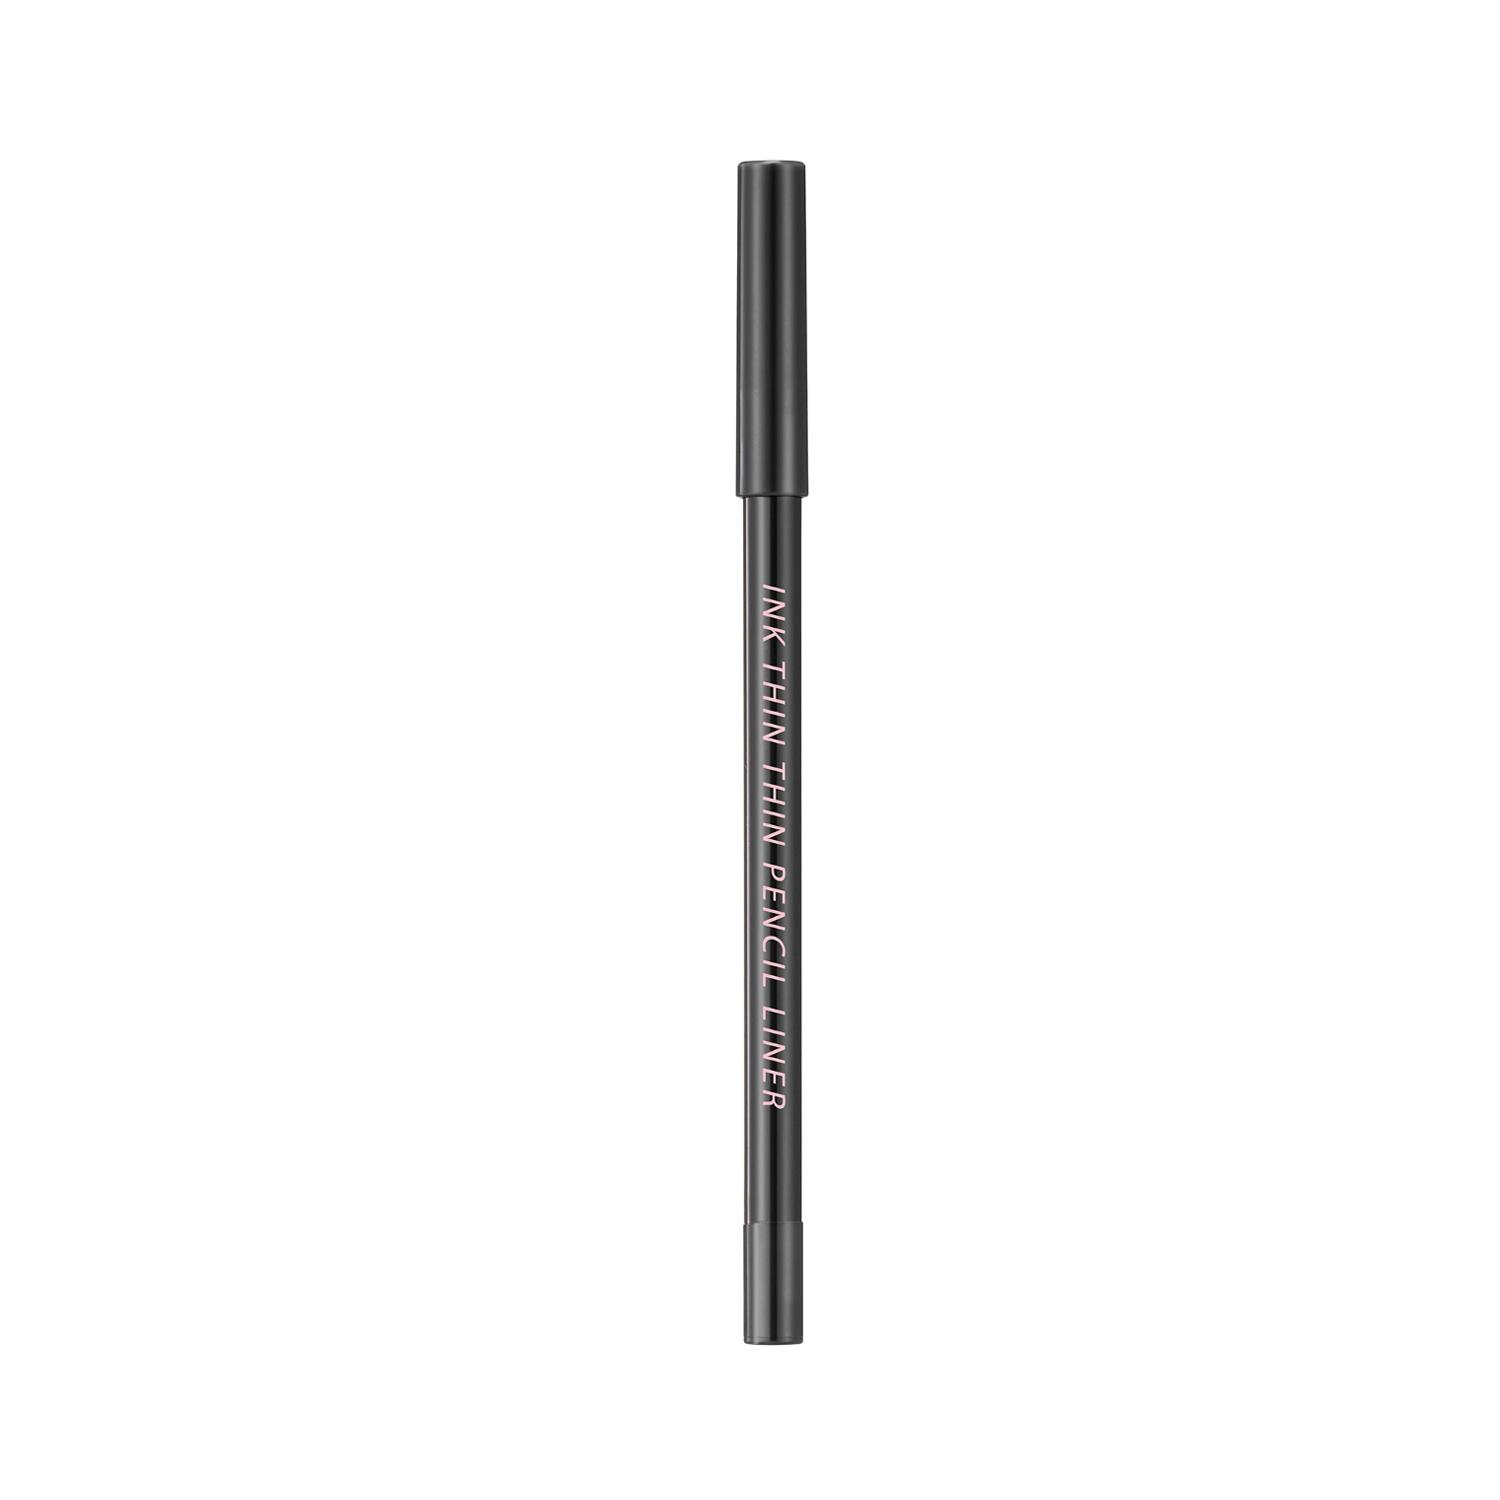 peripera ink thin thin pencil eyeliner - 04 roasting black (0.13g)